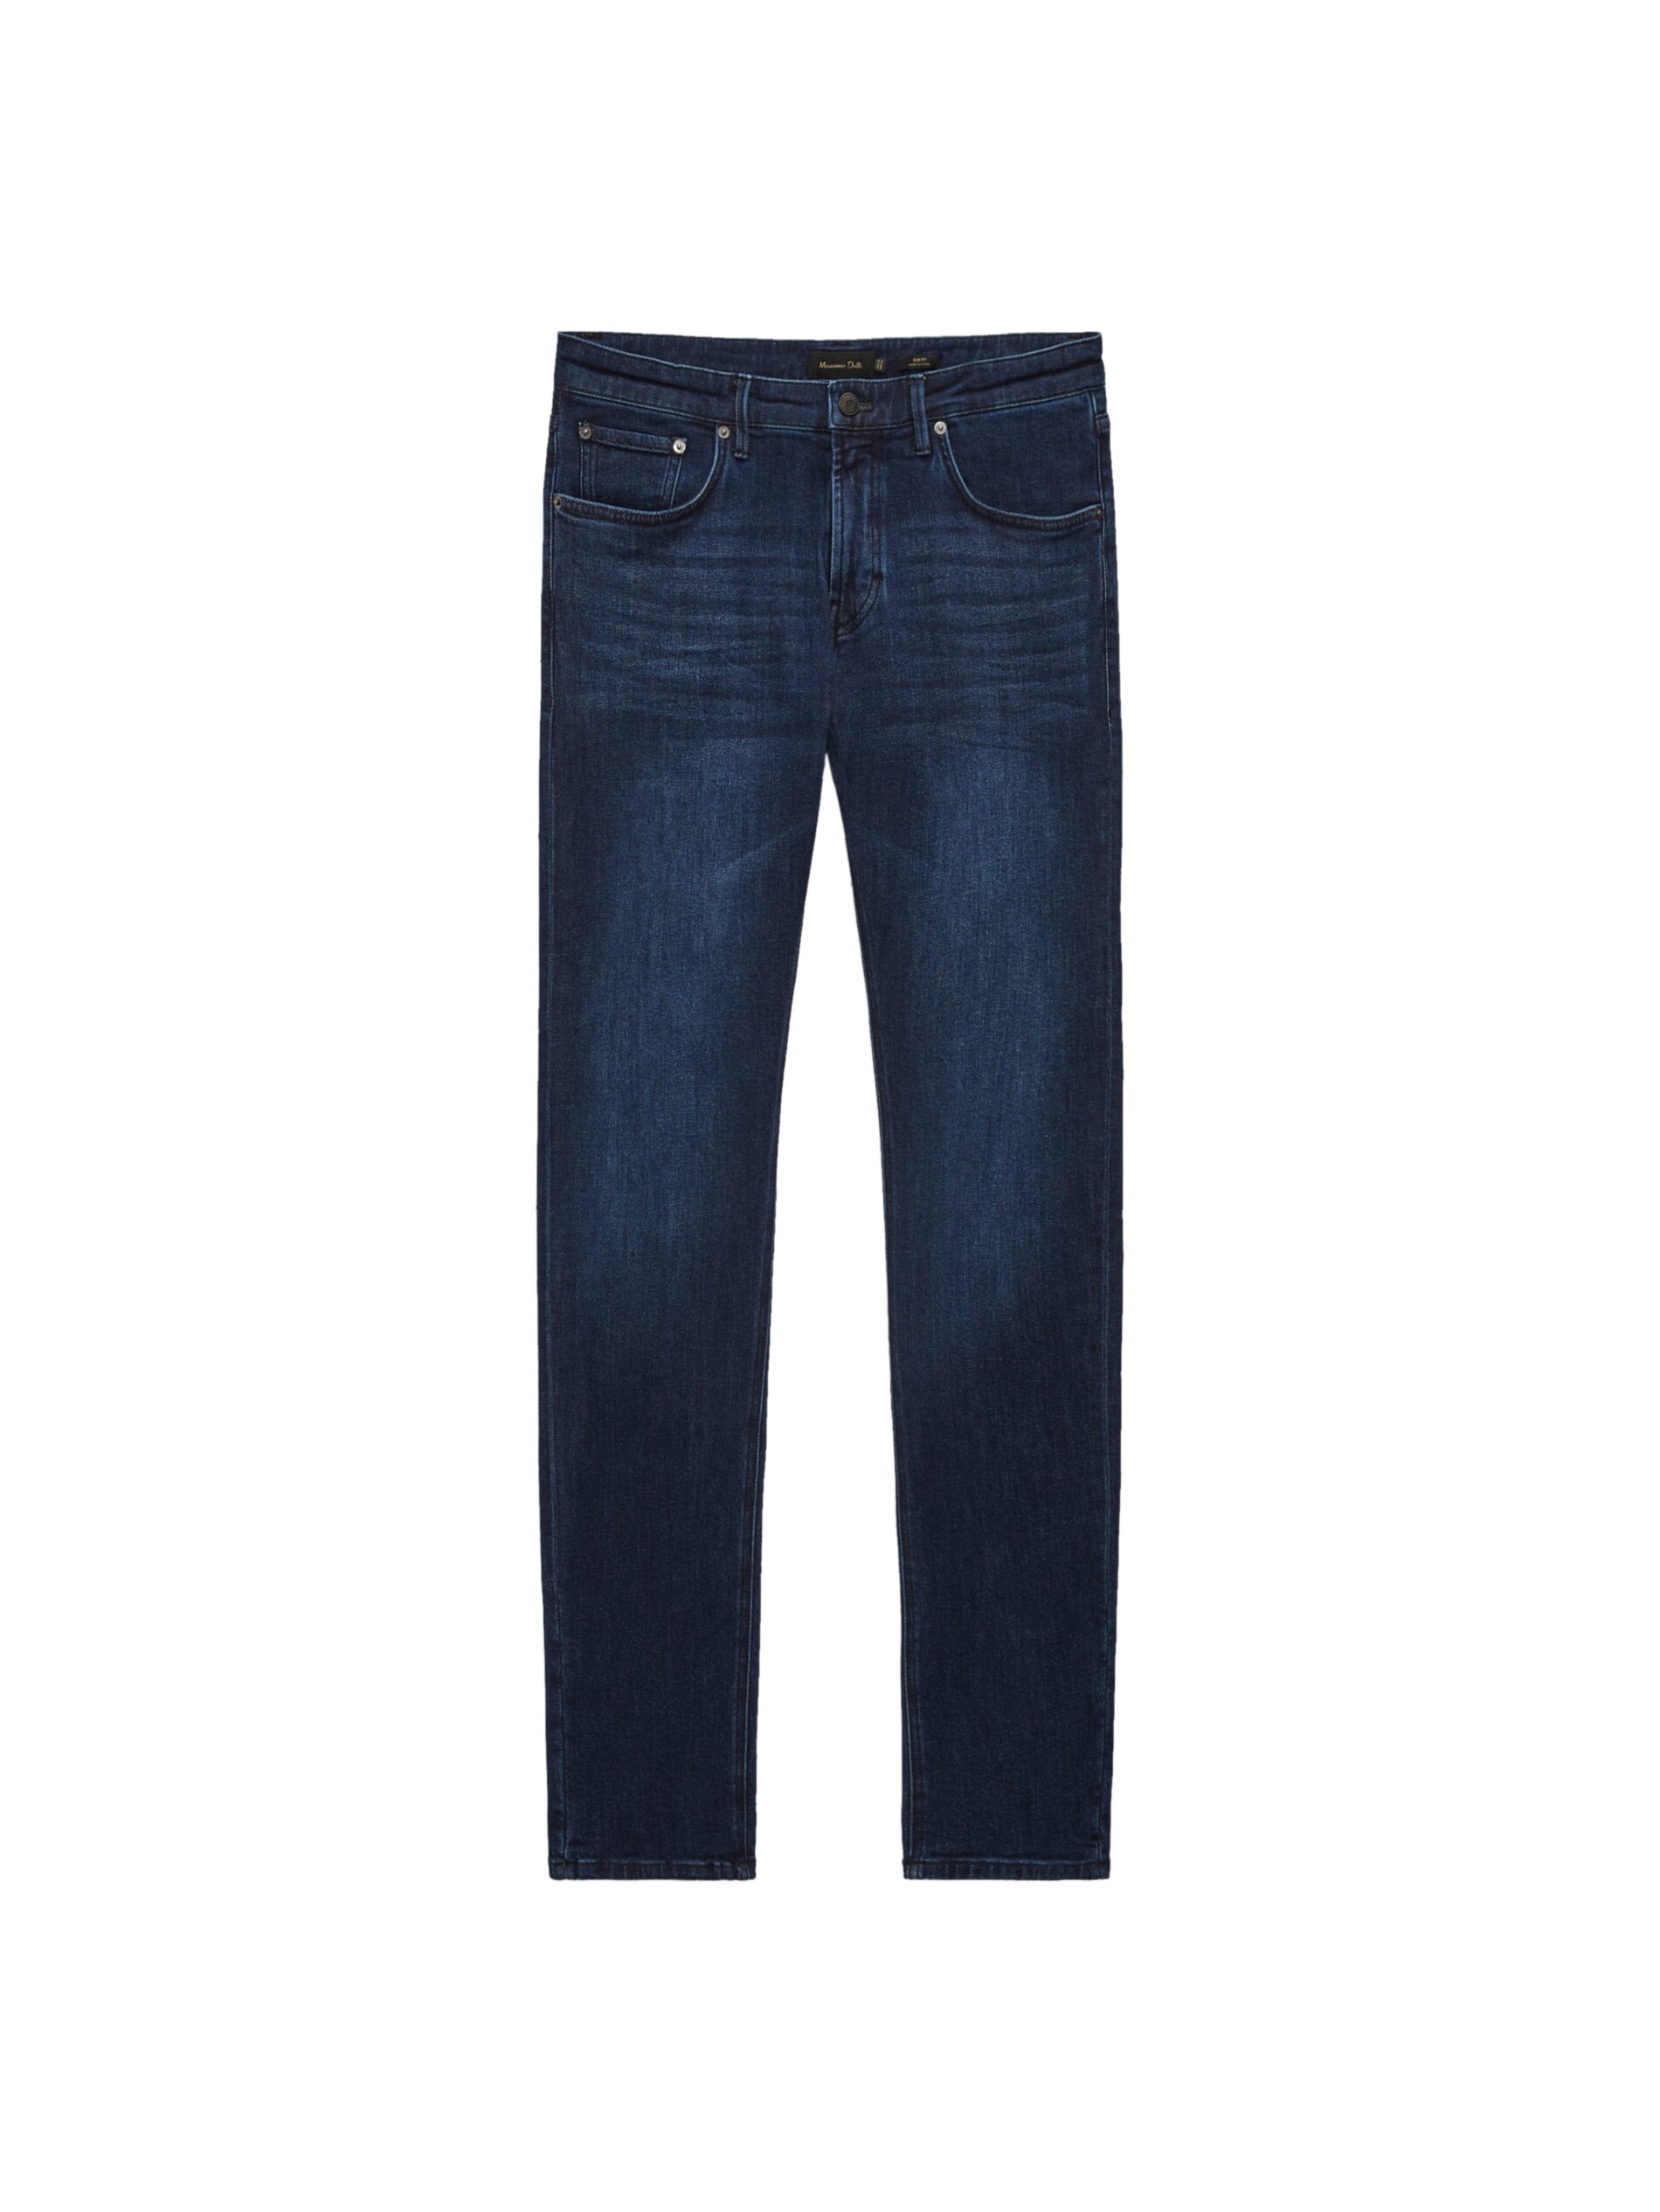 MEN FASHION Jeans Basic discount 66% Massimo Dutti straight jeans Navy Blue 34                  EU 